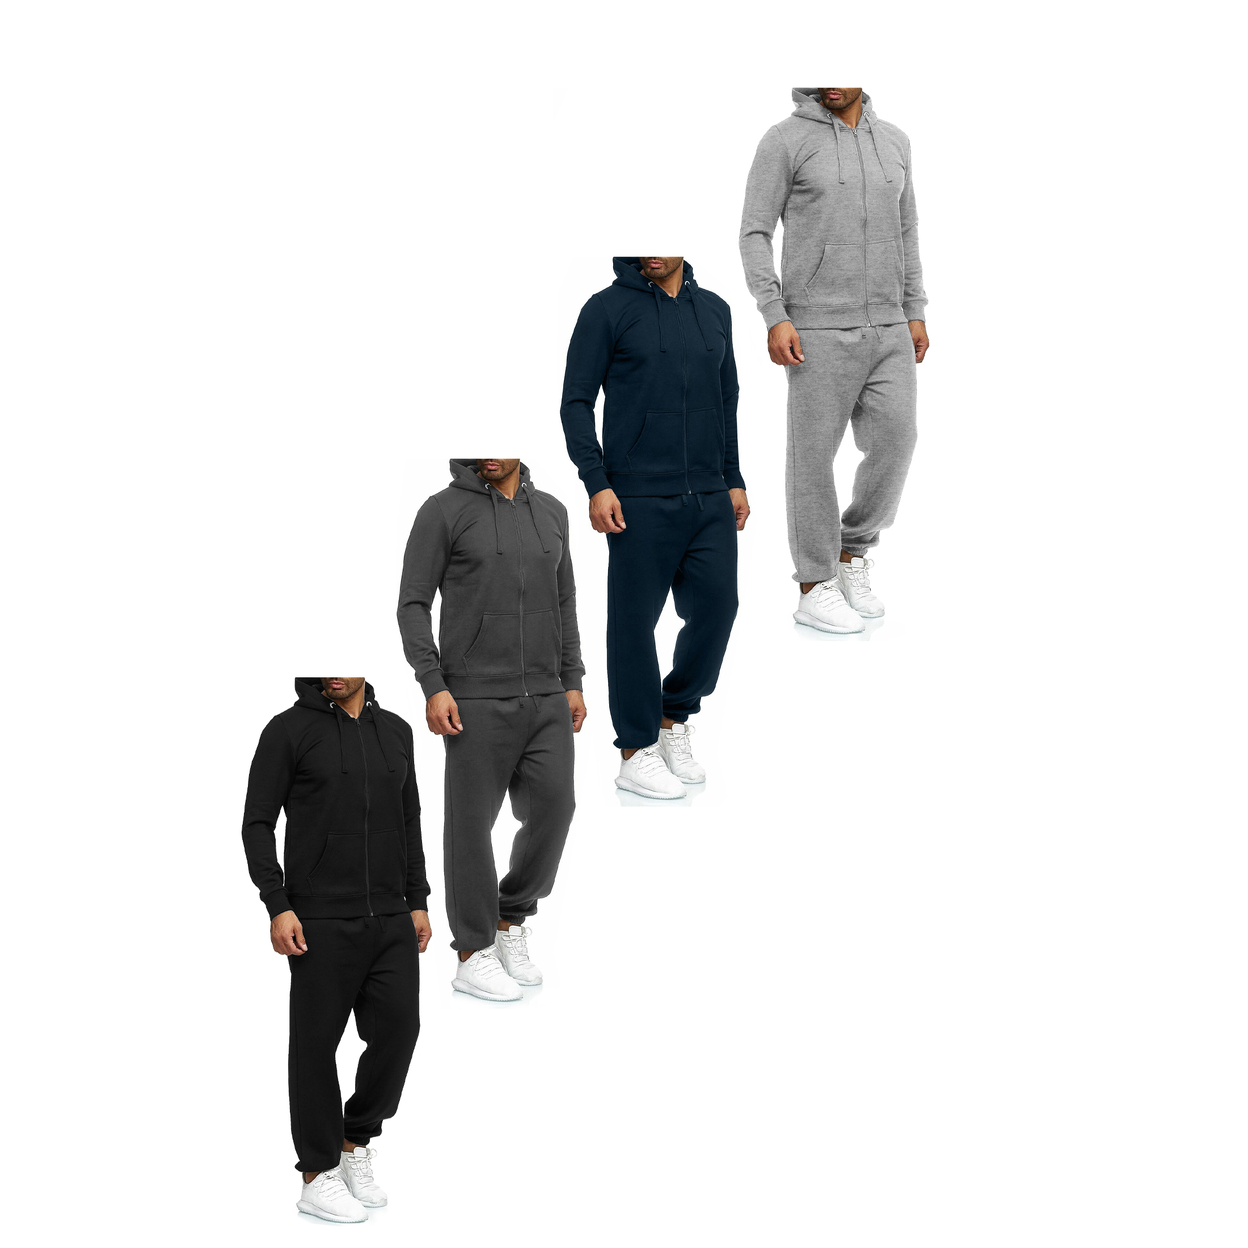 Multi-Pack: Men's Casual Big & Tall Athletic Active Winter Warm Fleece Lined Full Zip Tracksuit Jogger Set - Black, 2-pack, Medium